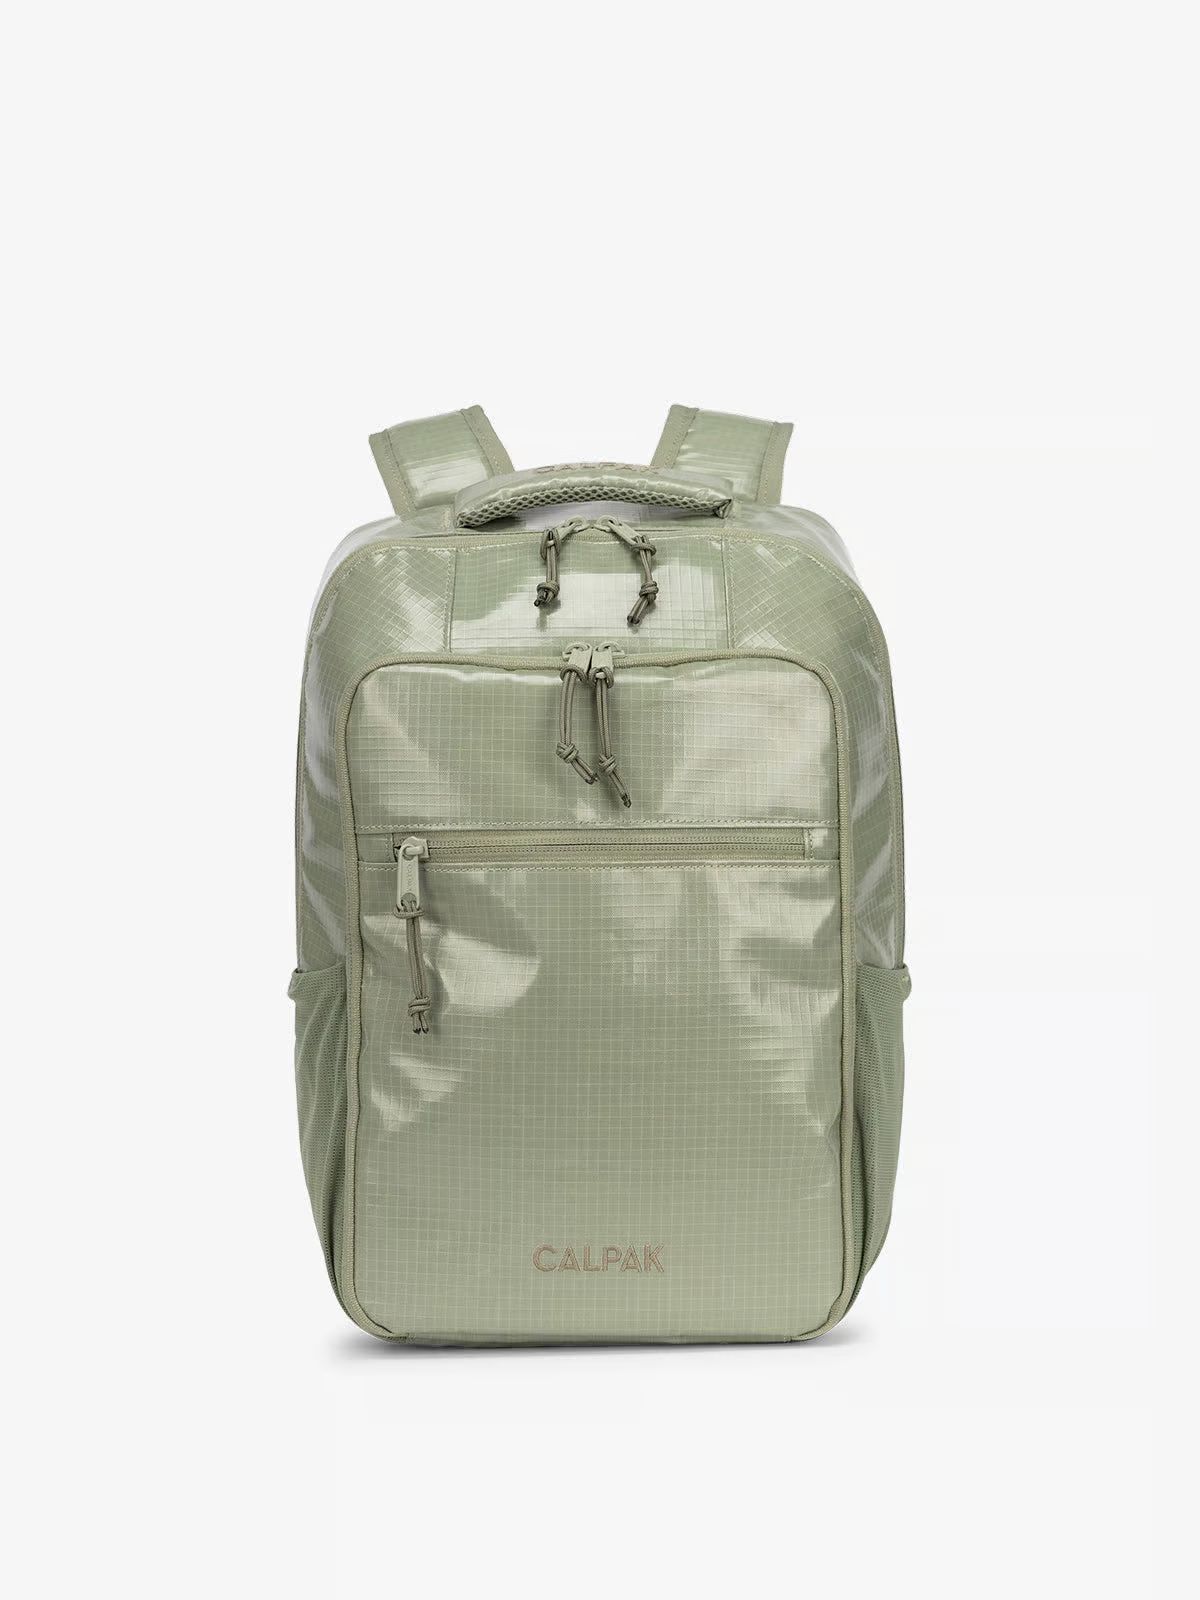 Terra Laptop Backpack | CALPAK | CALPAK Travel